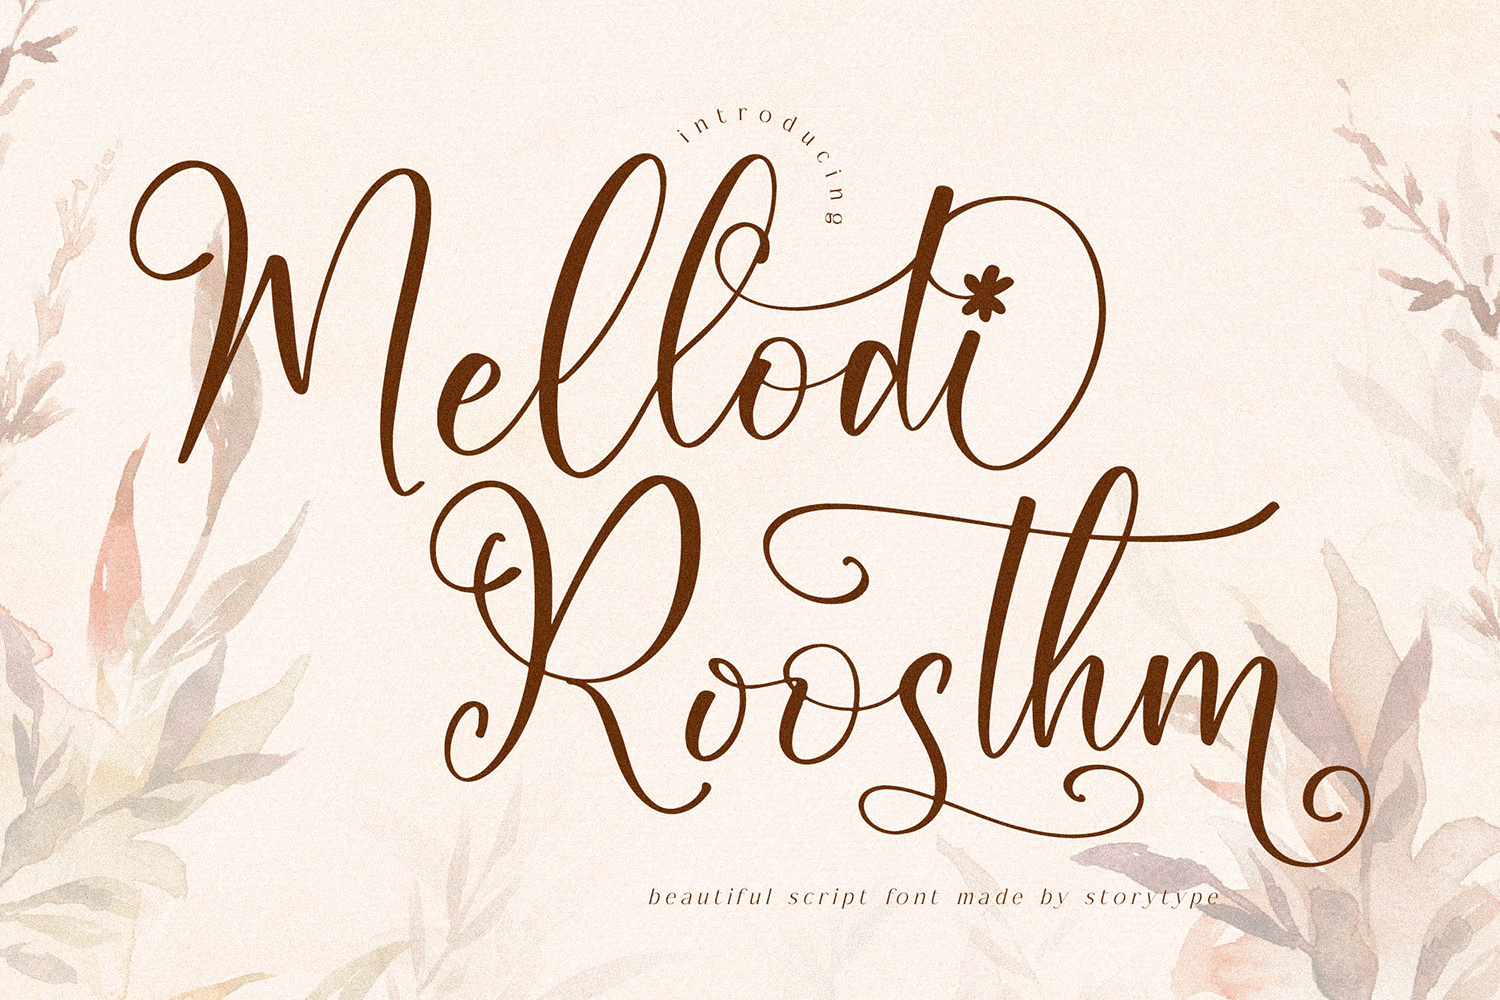 Mellodi Roosthm Free Font